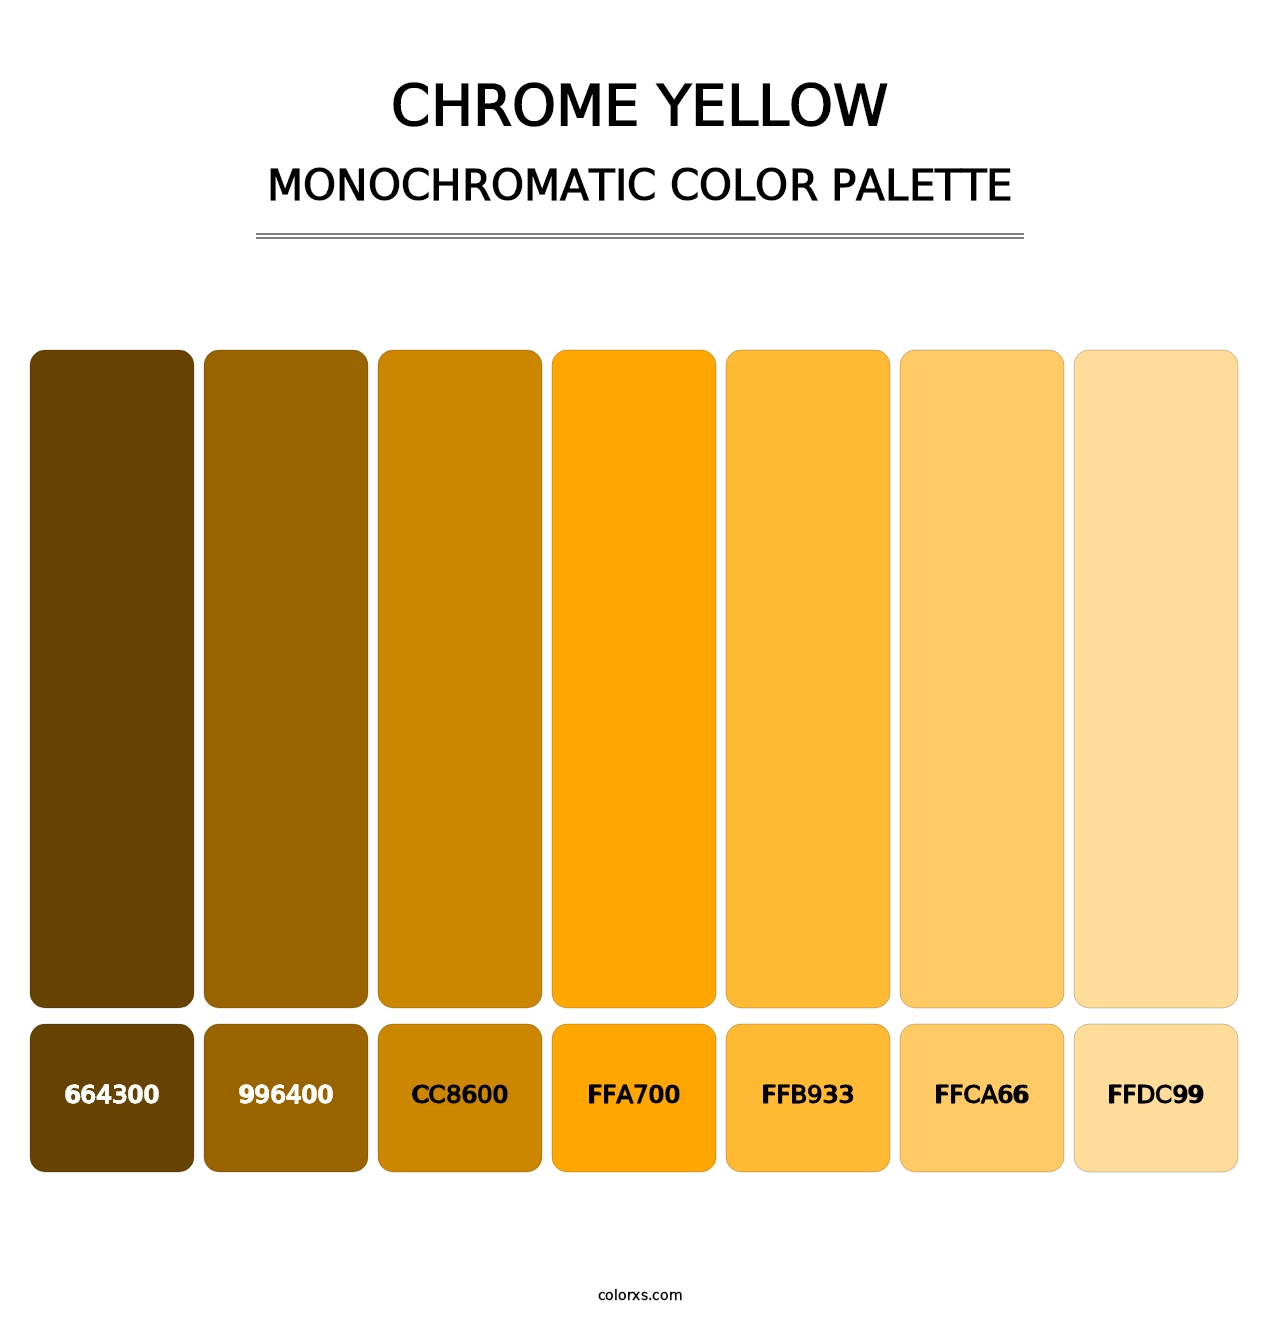 Chrome Yellow - Monochromatic Color Palette